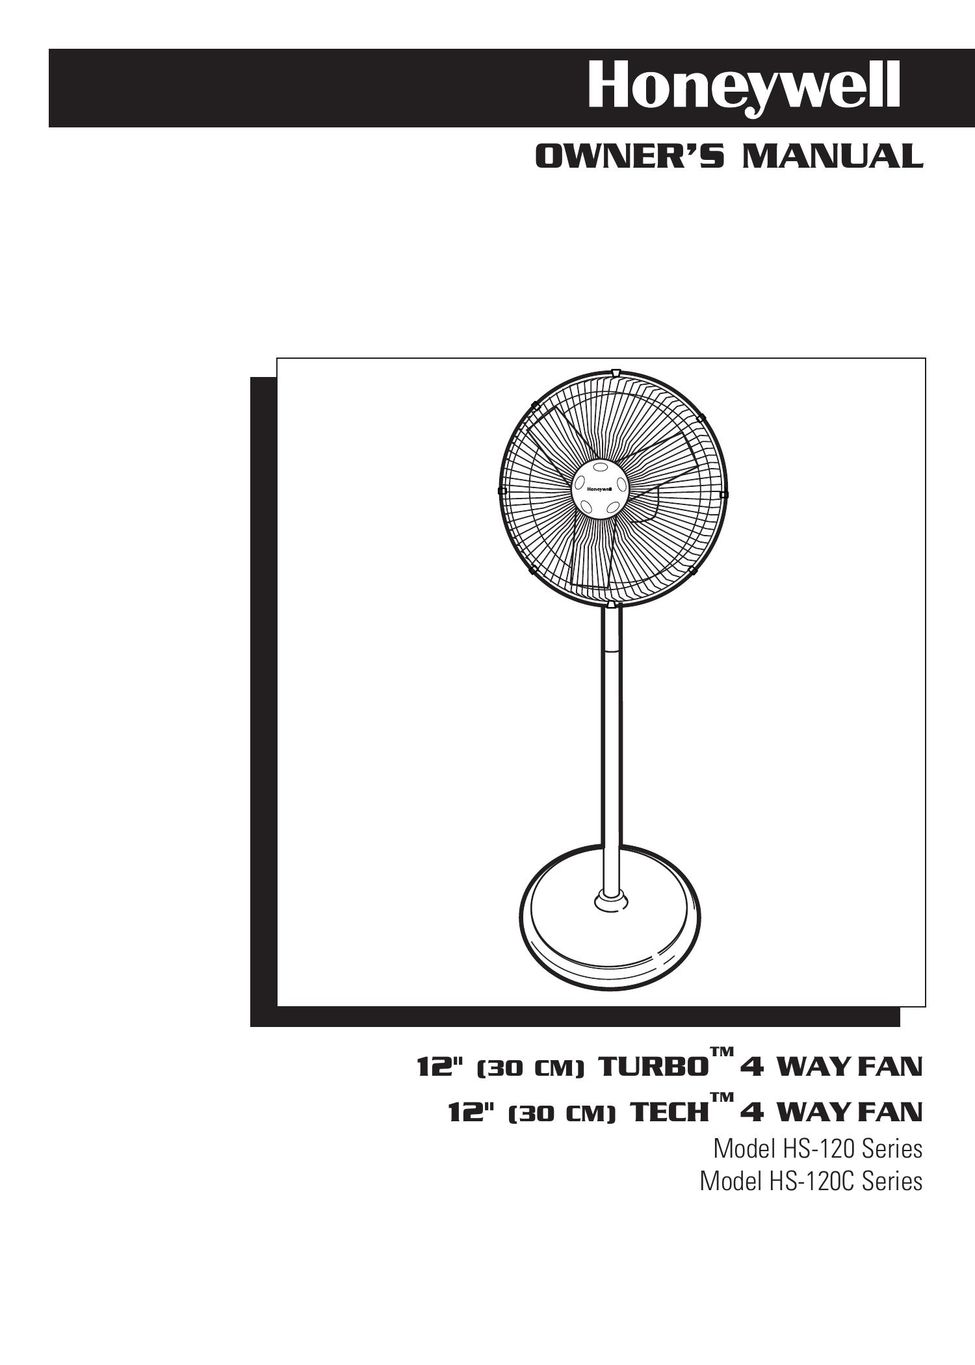 Honeywell HS-120C Series Fan User Manual